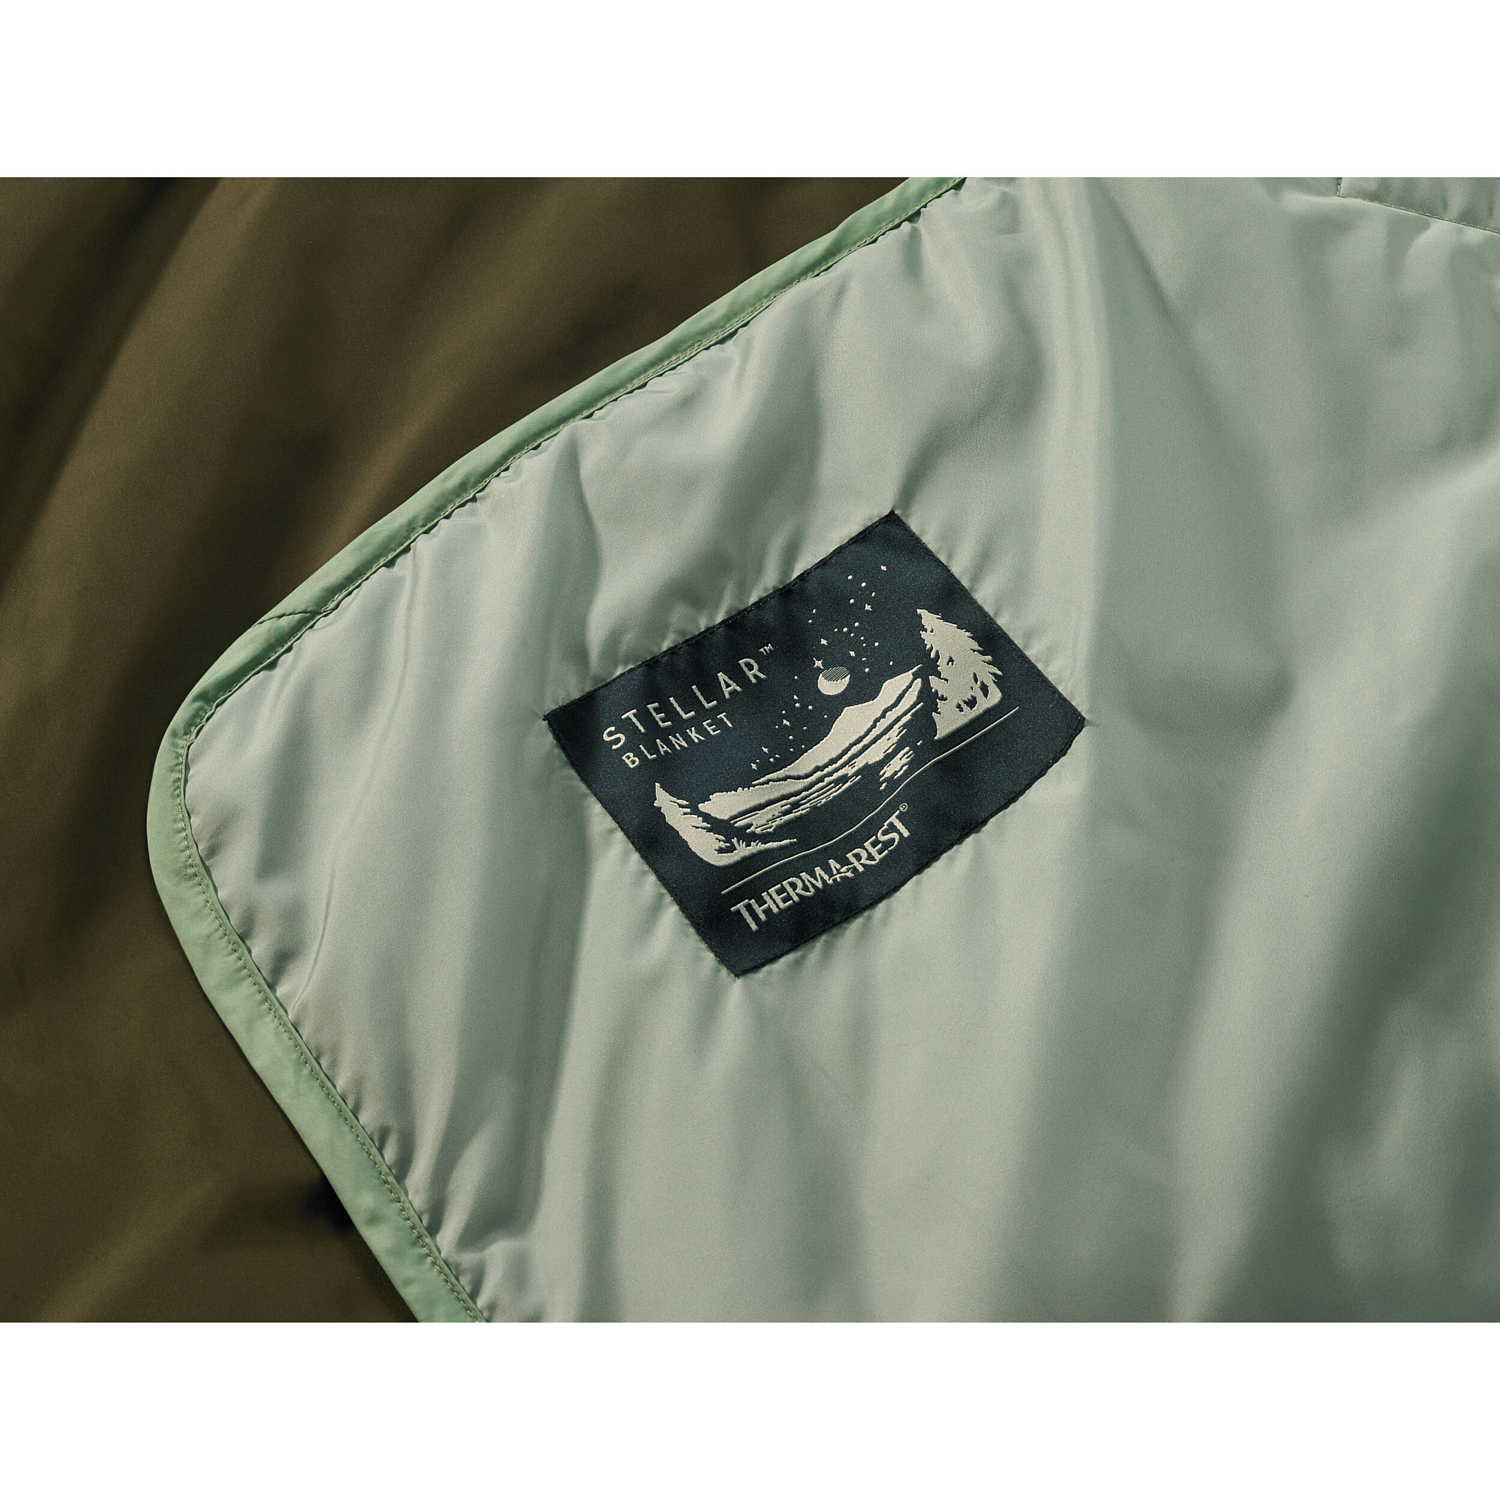 Одеяло THERM-A-REST Stellar Blanket Bison Print